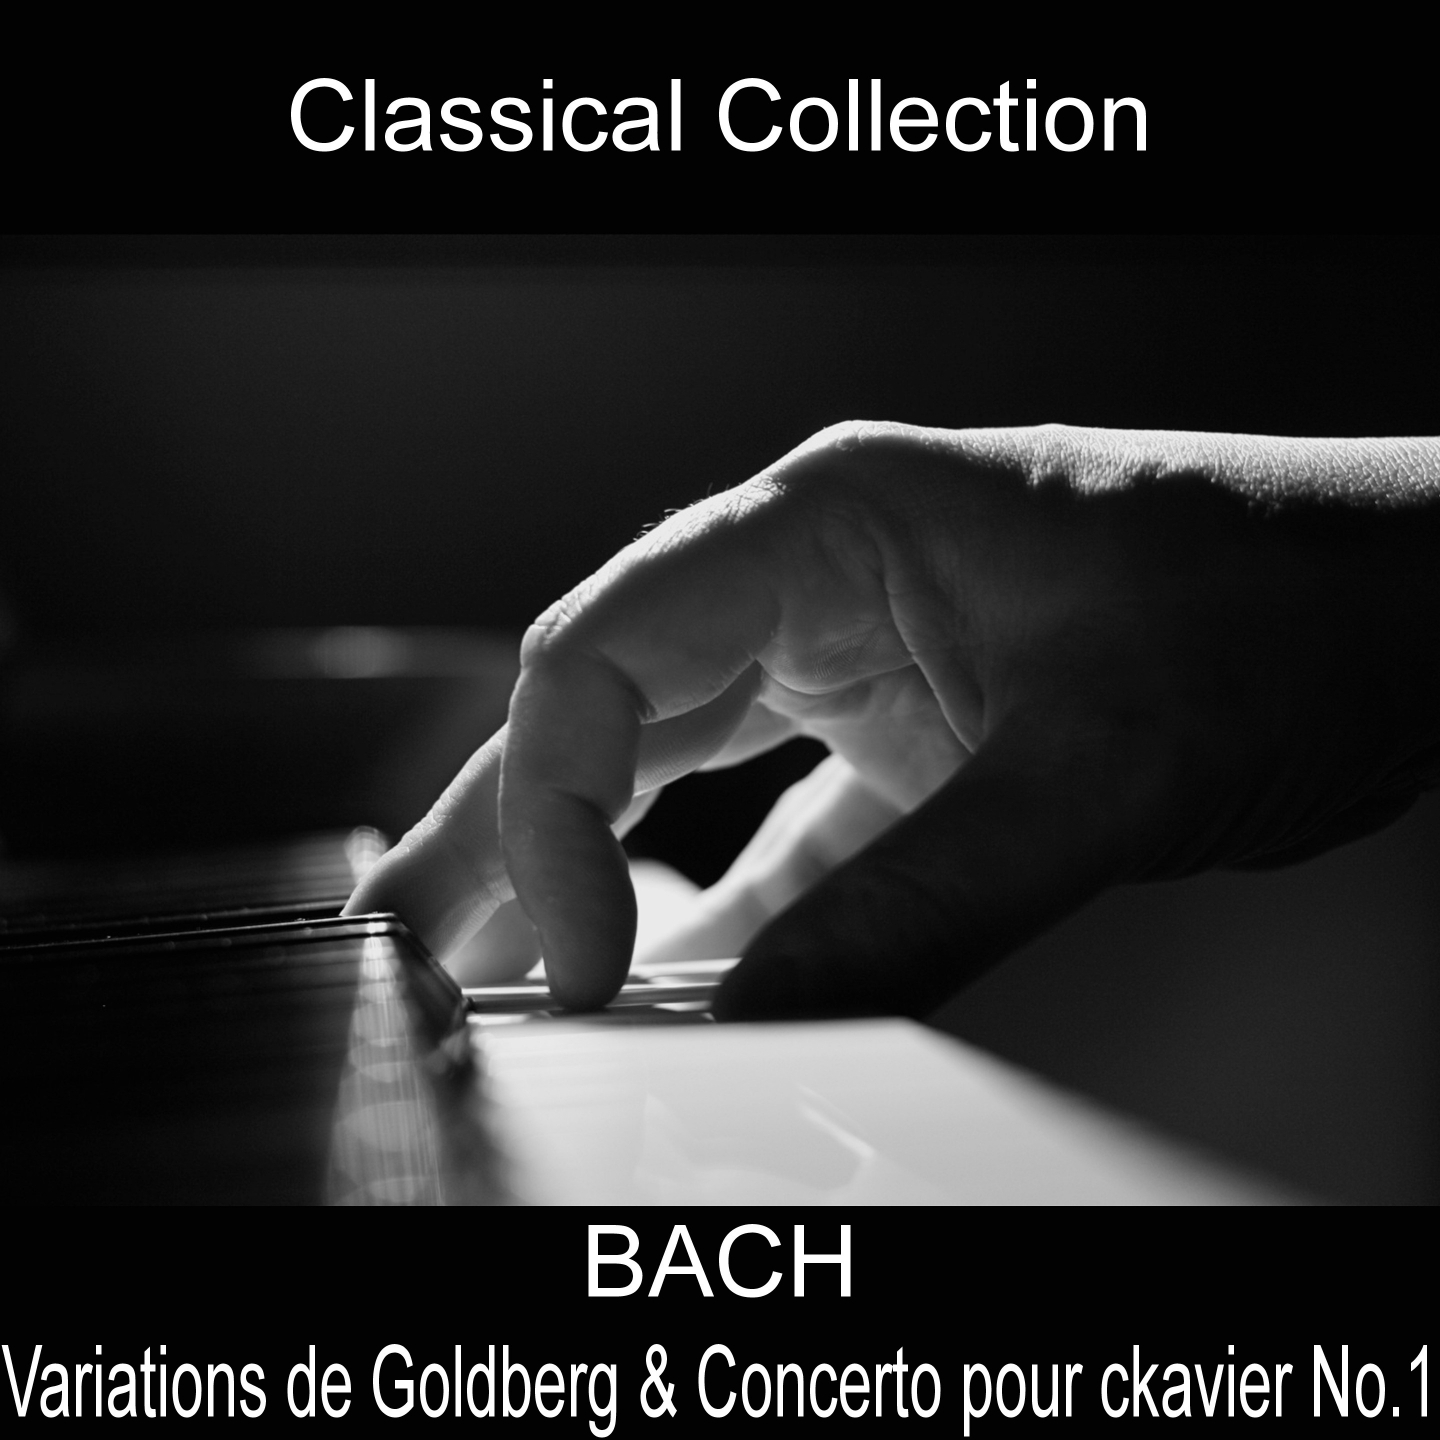 Variations Goldberg, BWV 988: No. 4, Variation III Canone all'unisono